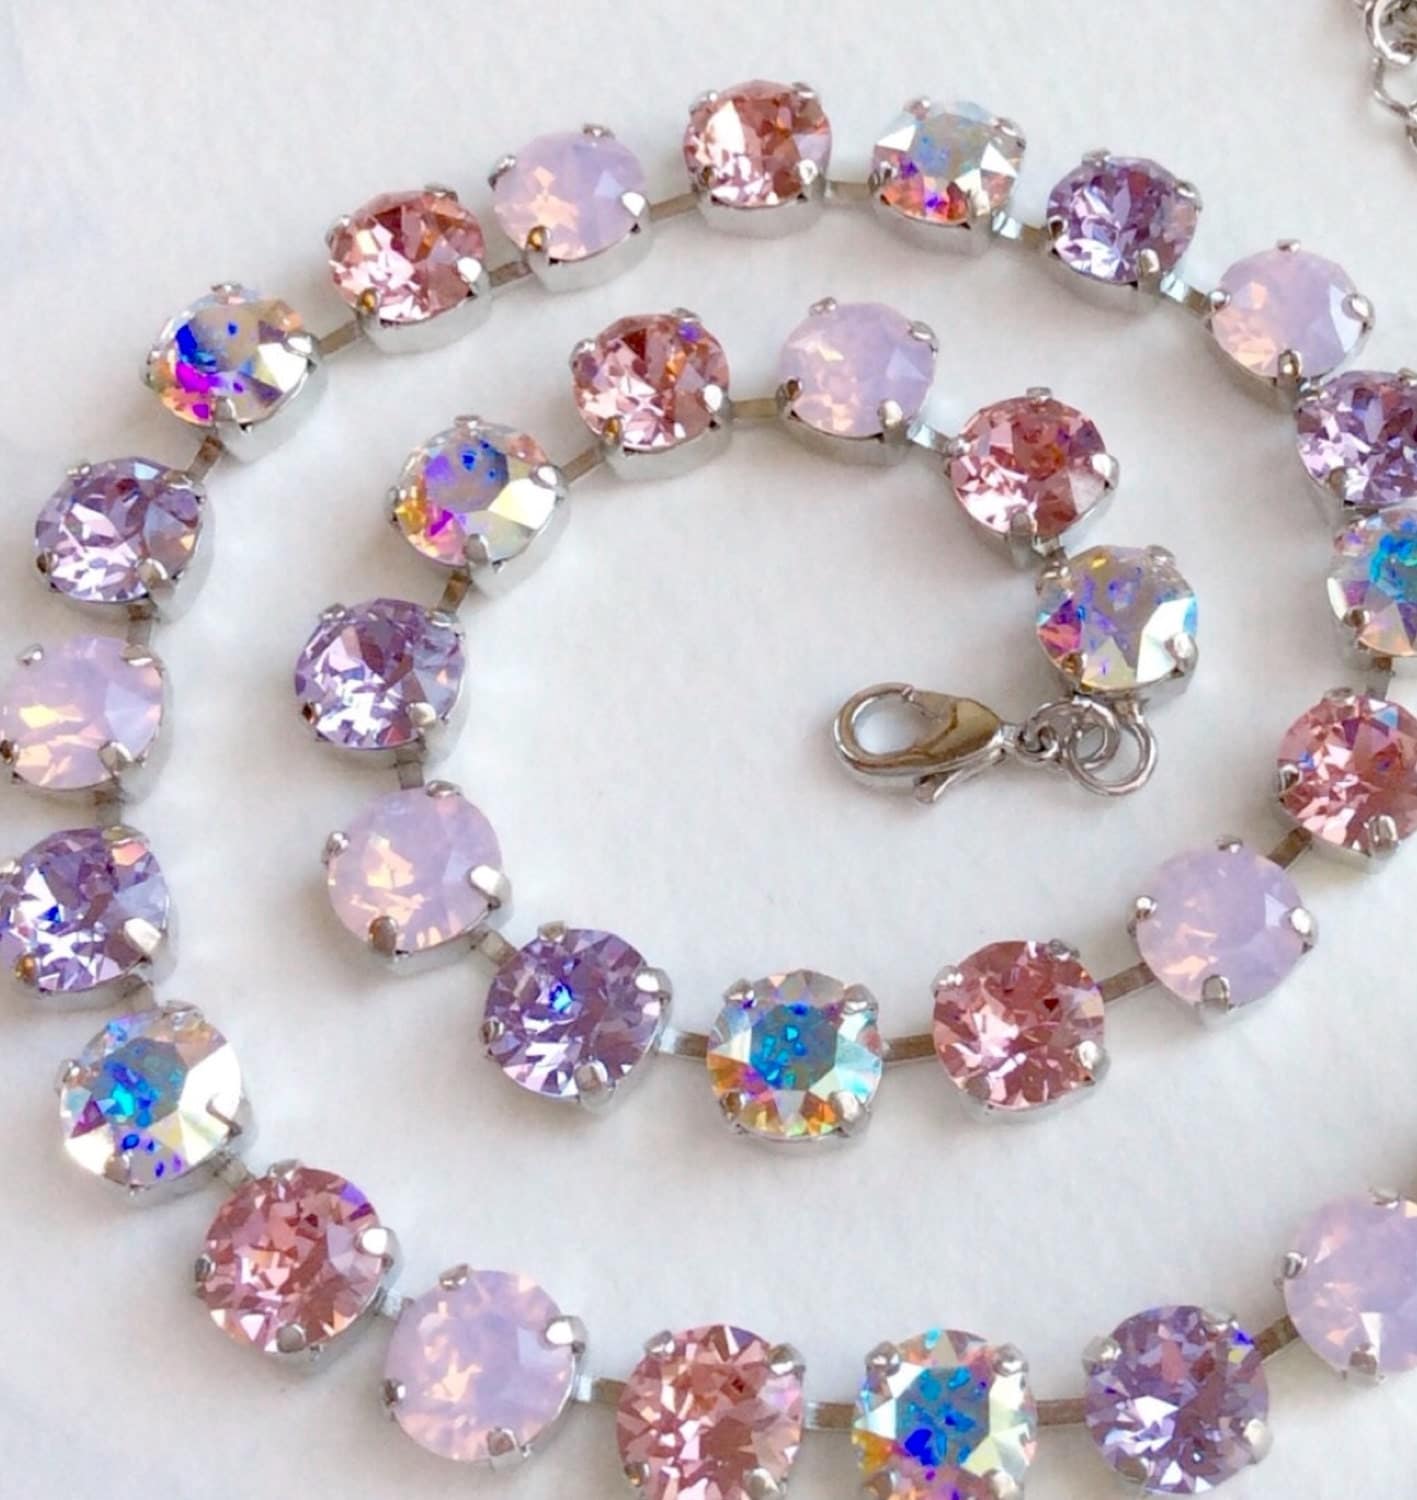 Swarovski Crystal 8.5mm Necklace  "Ballet Slipper" Soft & Feminine Pinks, Violets, Aurora Borealis - Designer Inspired - FREE SHIPPING